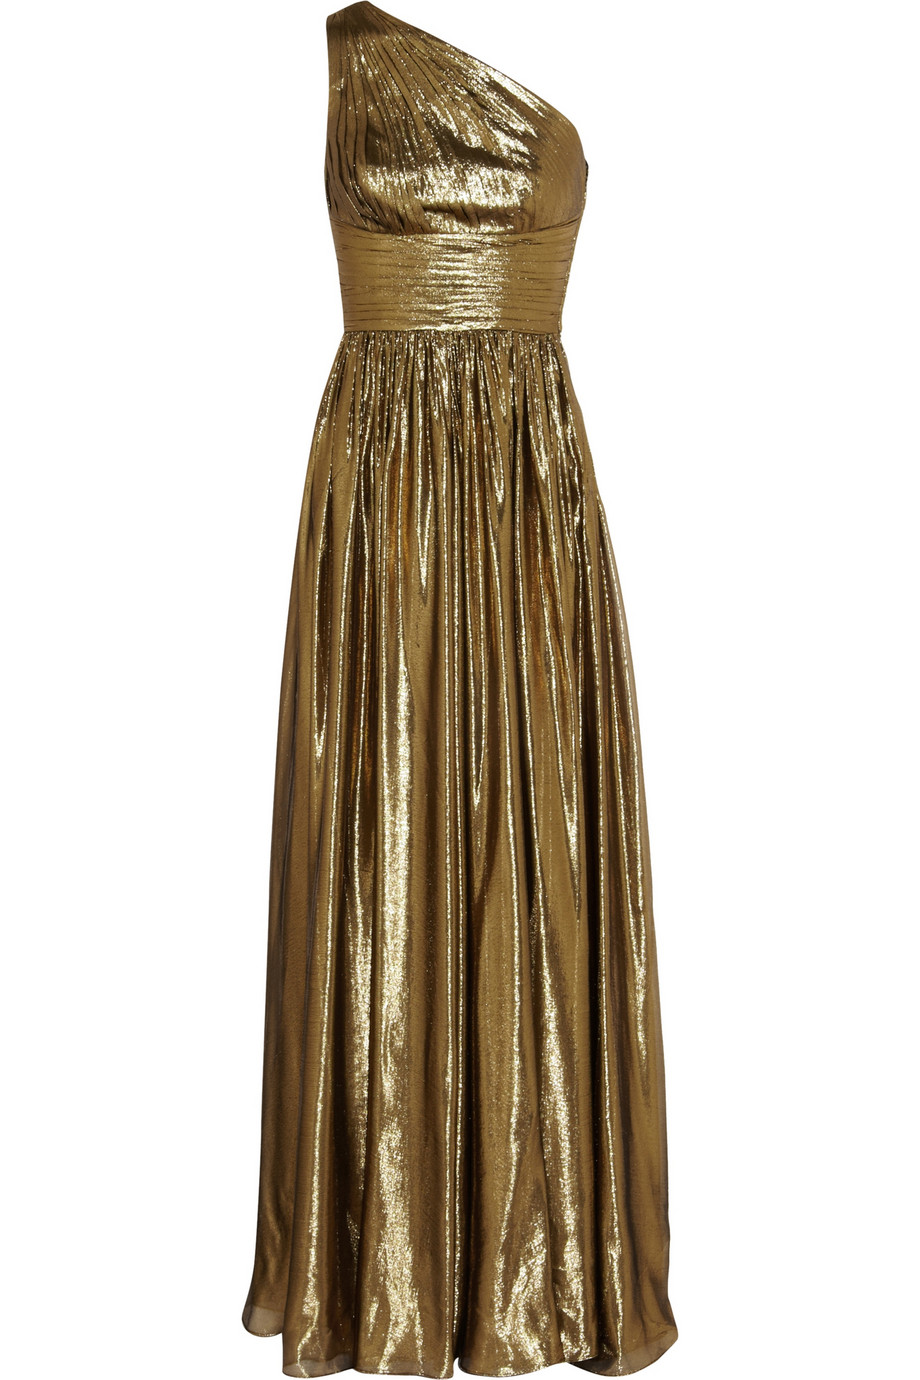 Michael Kors Metallic Silkblend Gown in Gold | Lyst